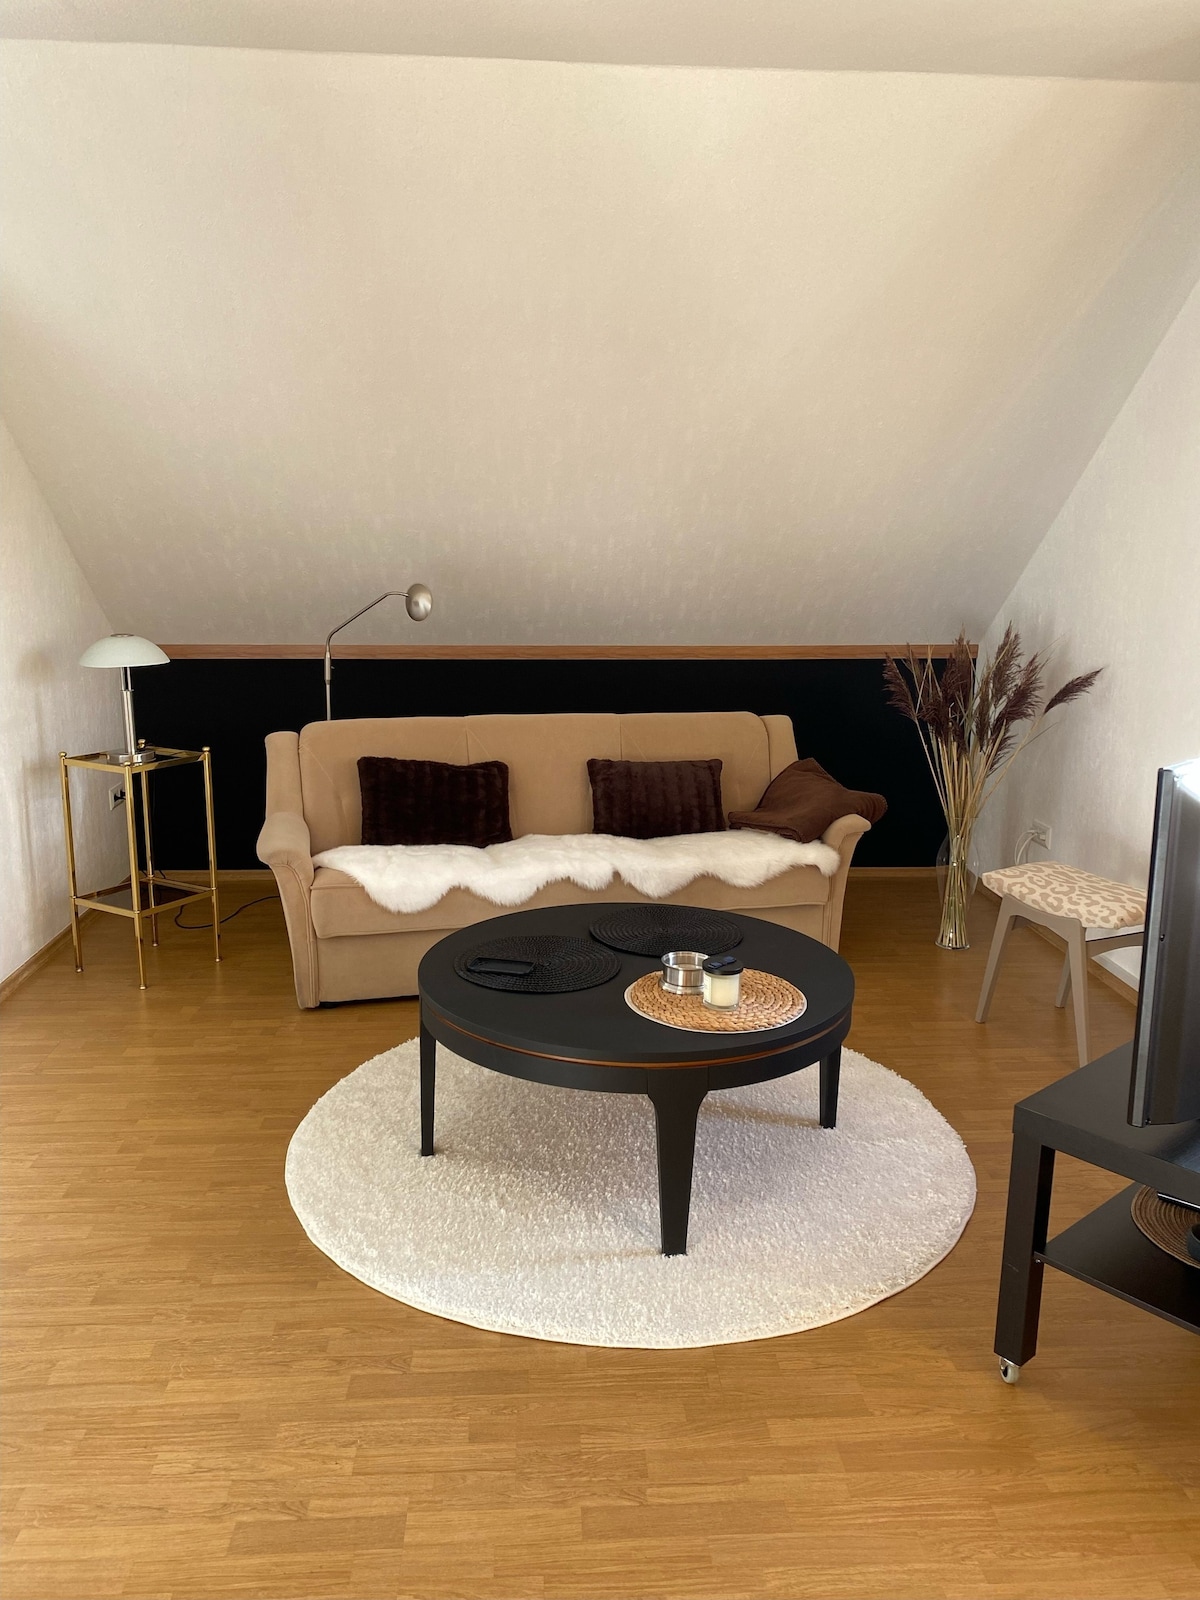 Hünfeld （ 264635 ） ，可容纳2位房客，面积70平方米